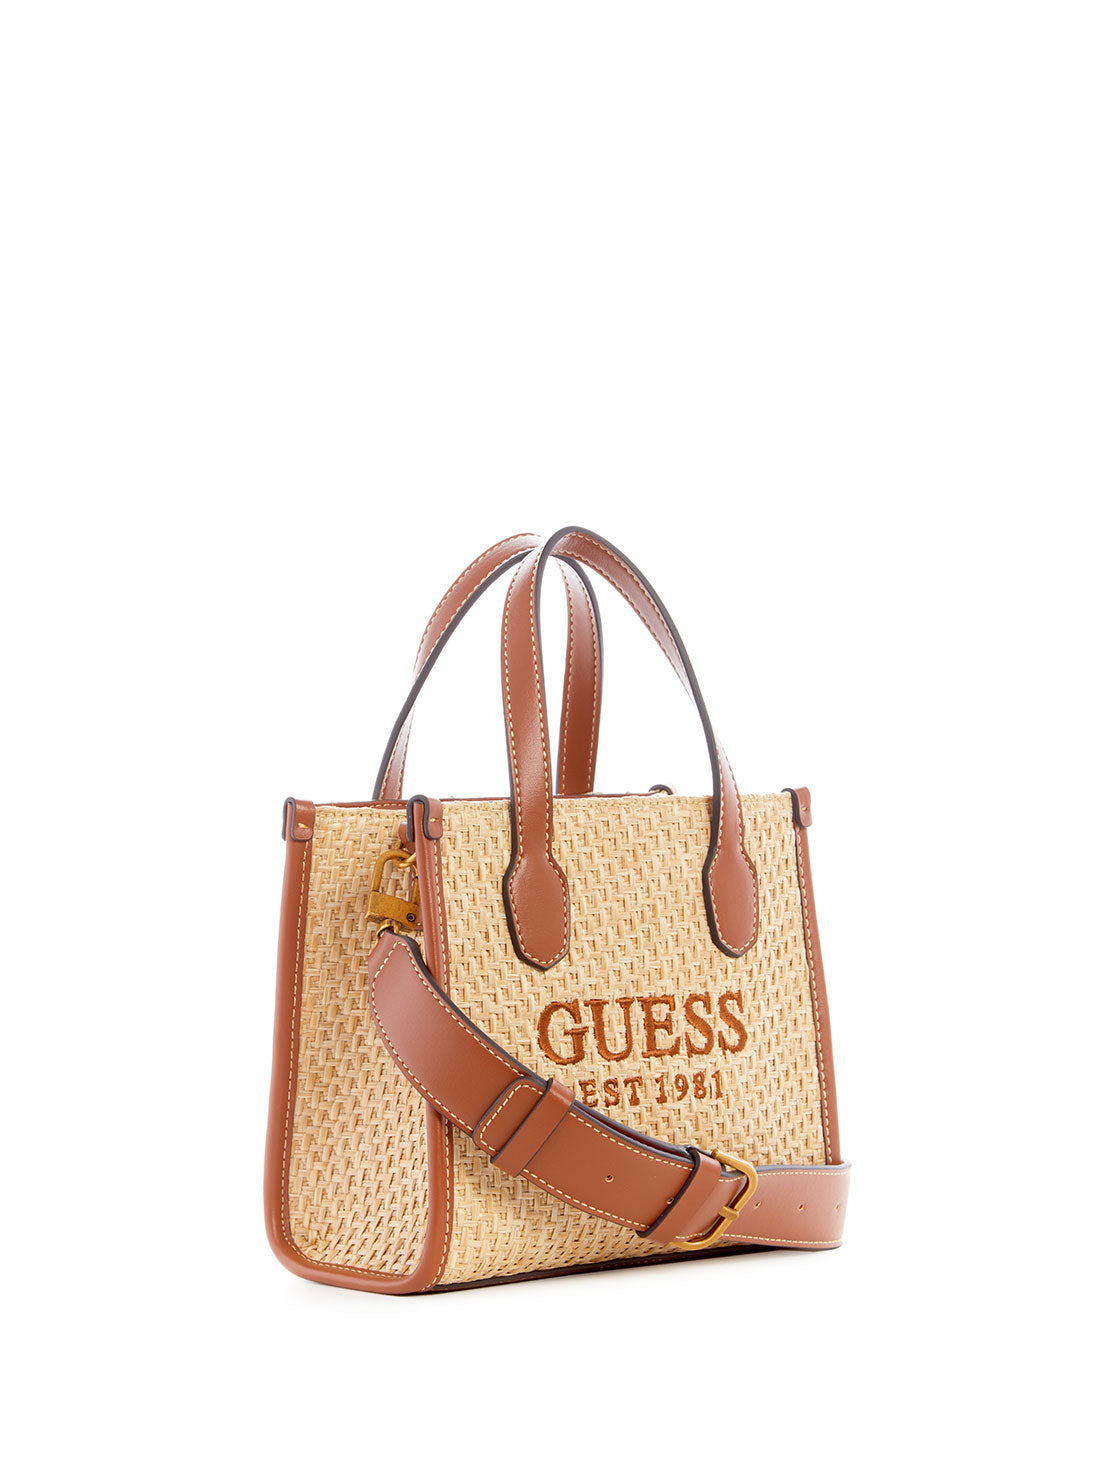 GUESS Women's Cognac Silvana Mini Tote Bag WS866577 Front Side View